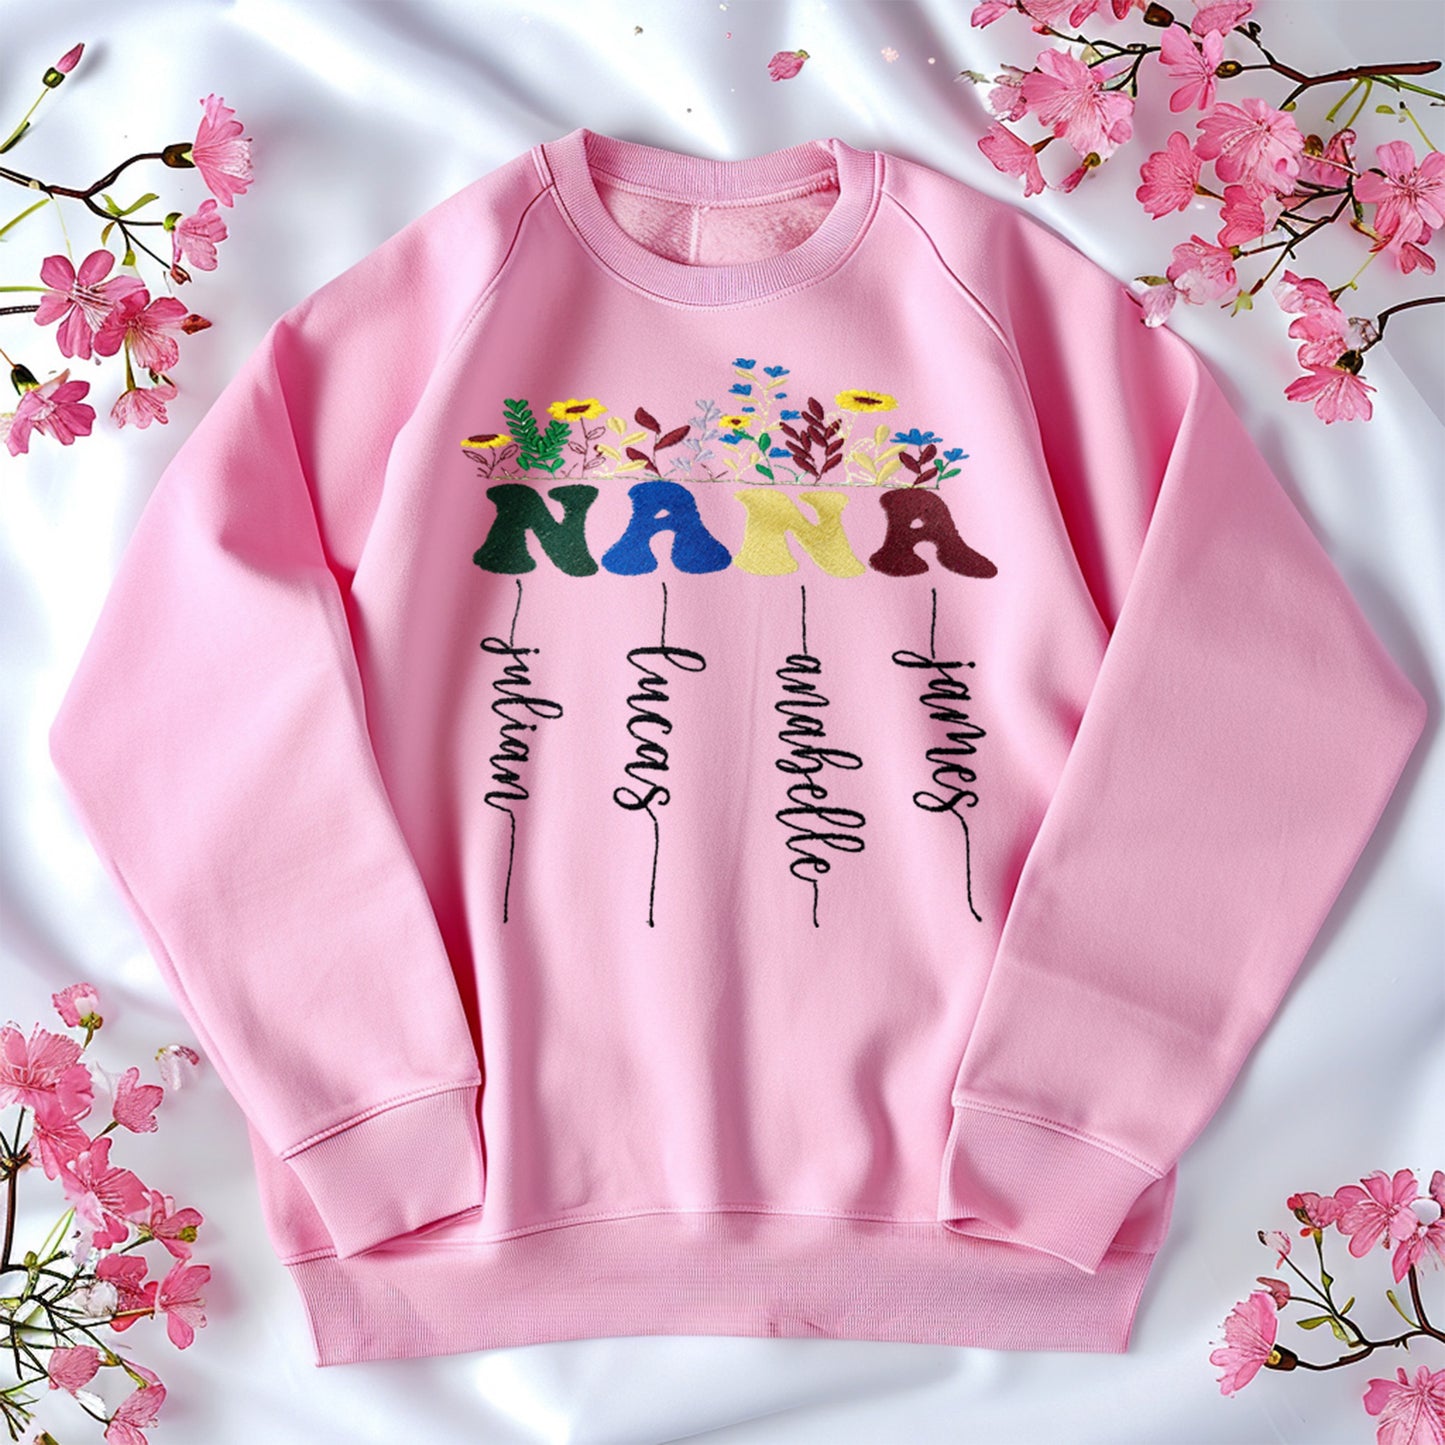 Nana Sweatshirt, Warm Grandma's heart with personalized love! Our Grandma's  garden Shirt with kid's names – a cherished keepsake.